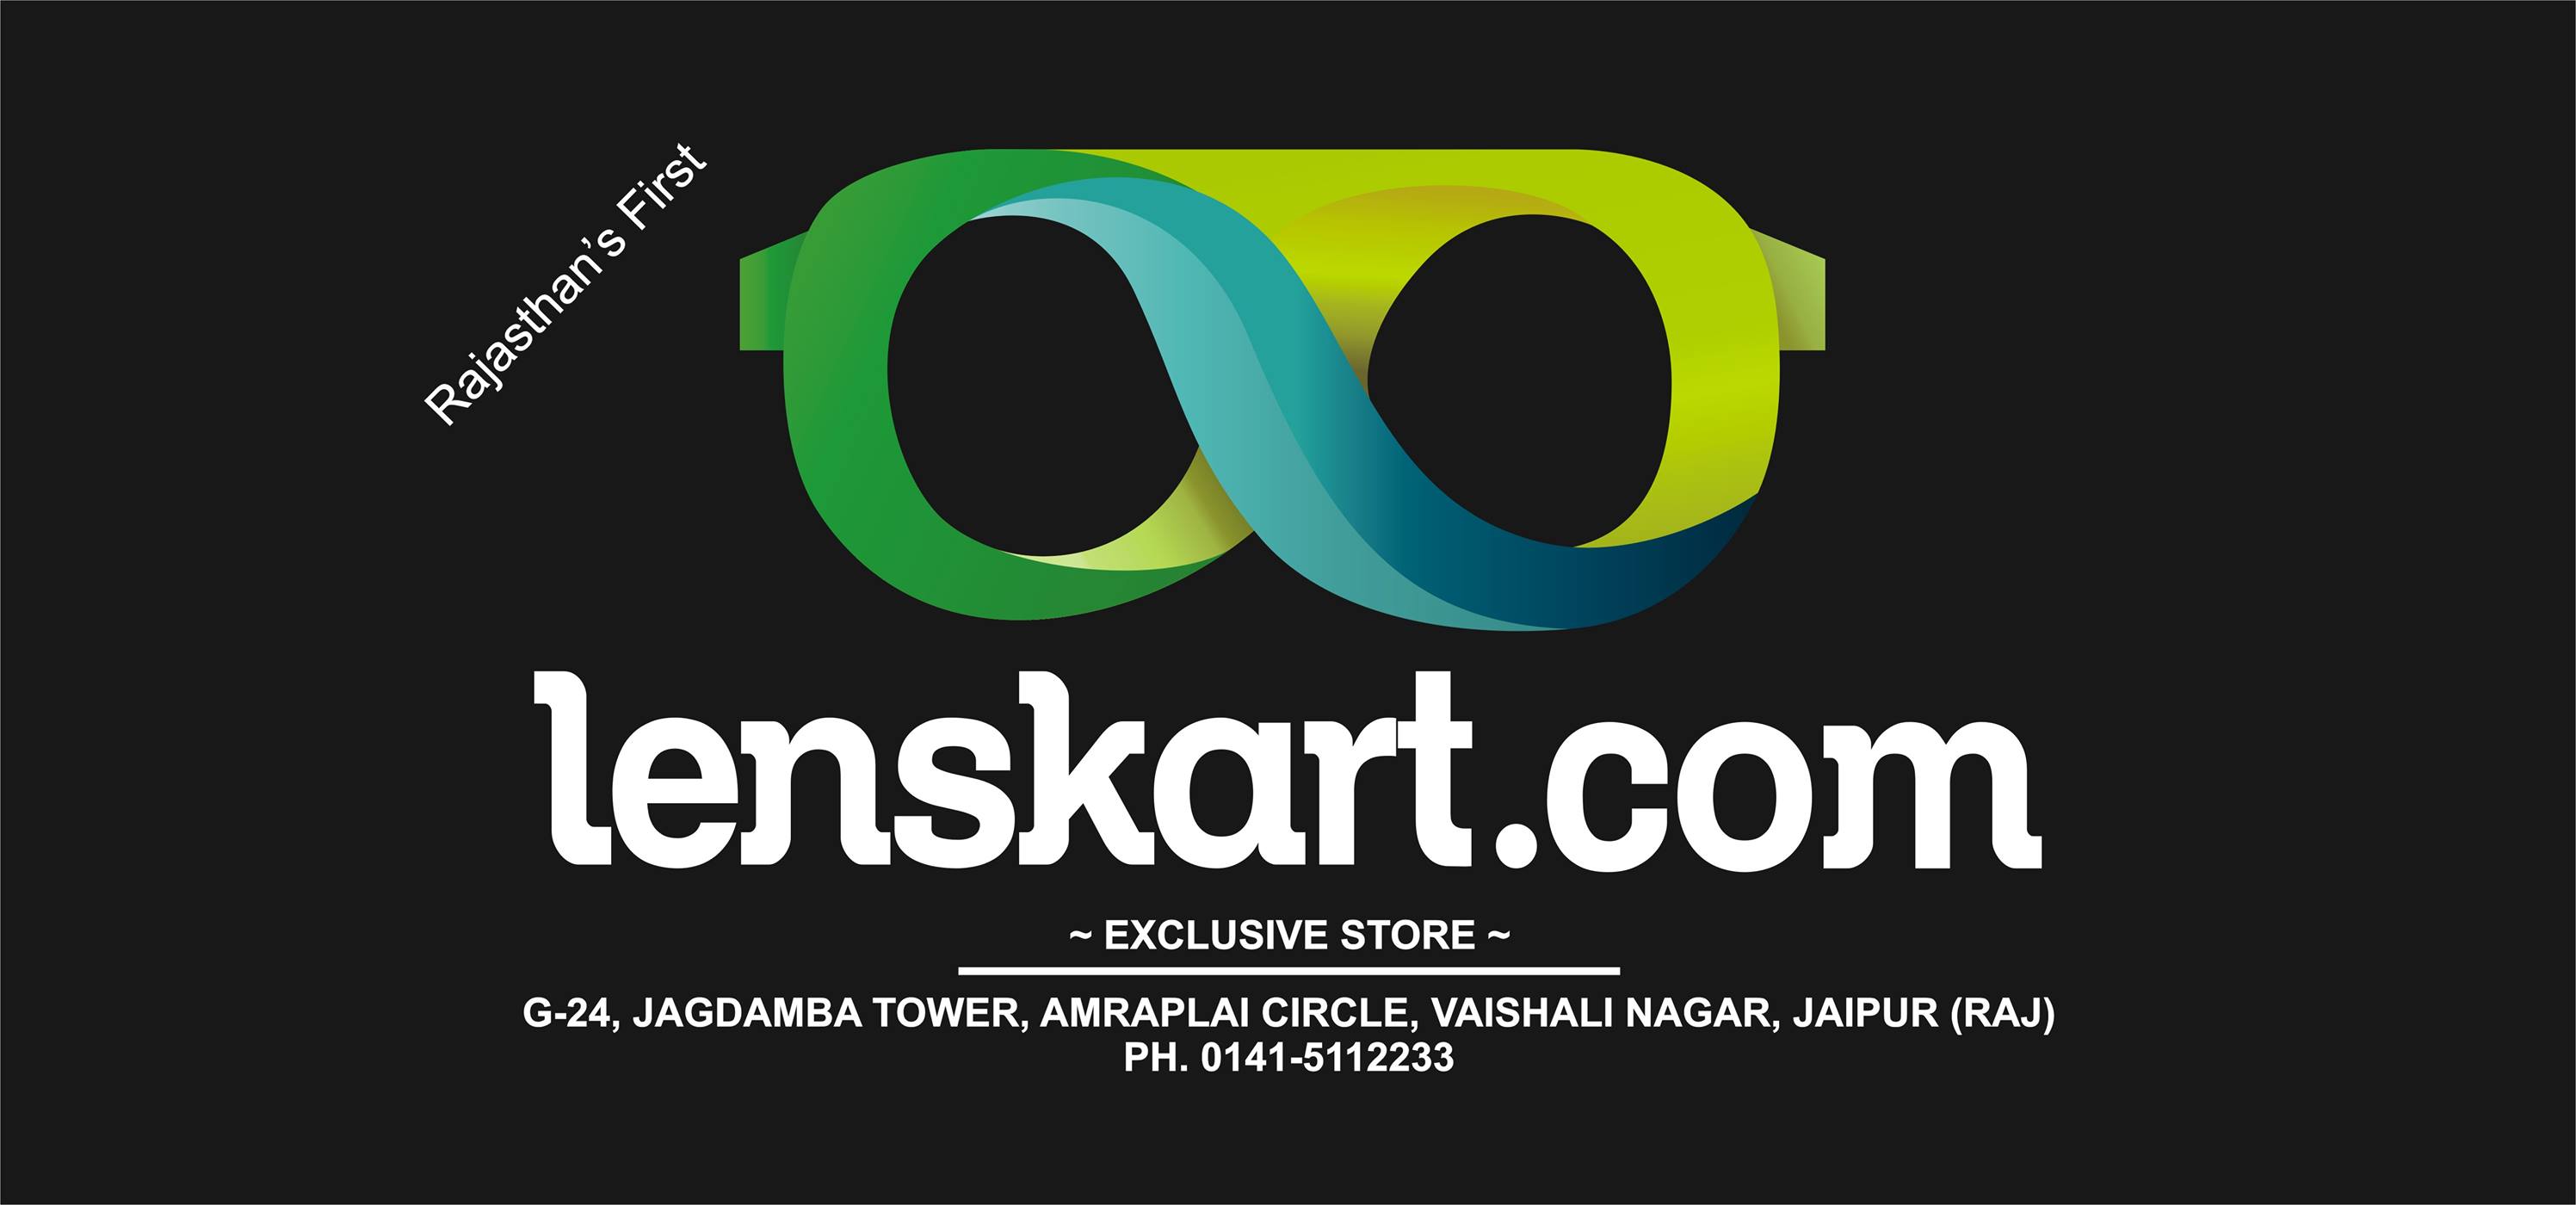 First Lenskart Store in Rajastan